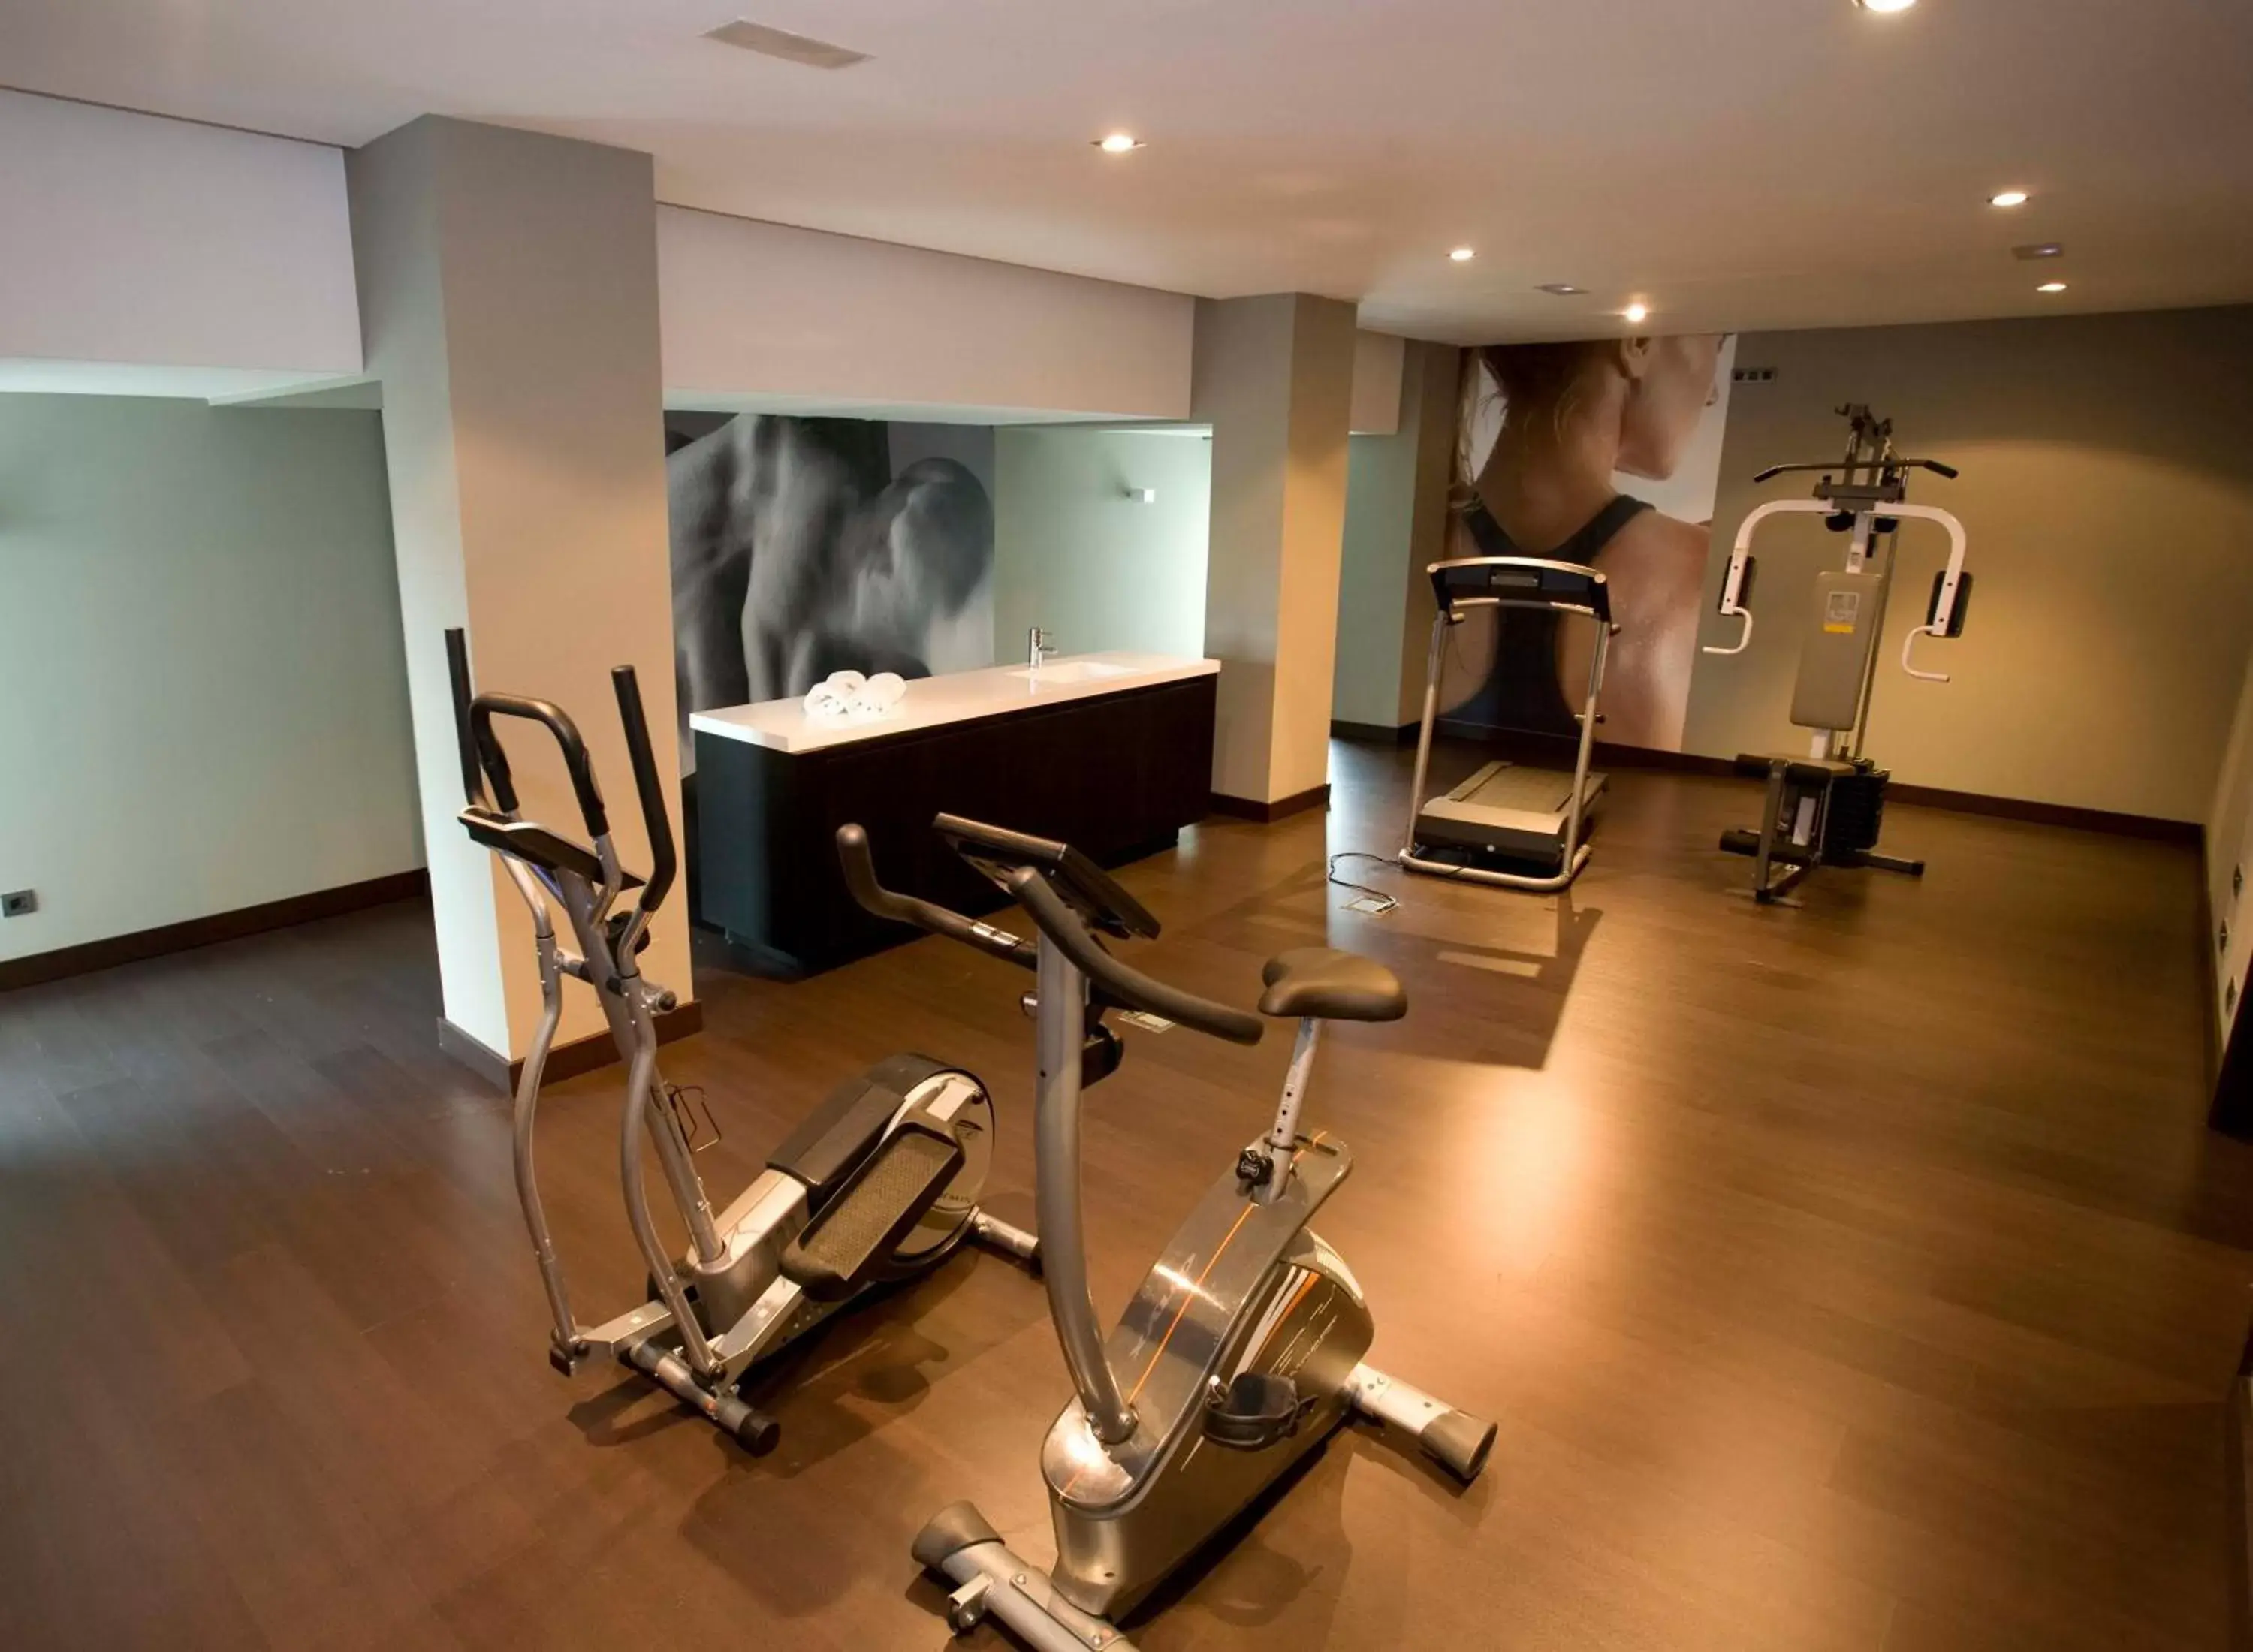 Fitness centre/facilities, Fitness Center/Facilities in Silken Gran Teatro